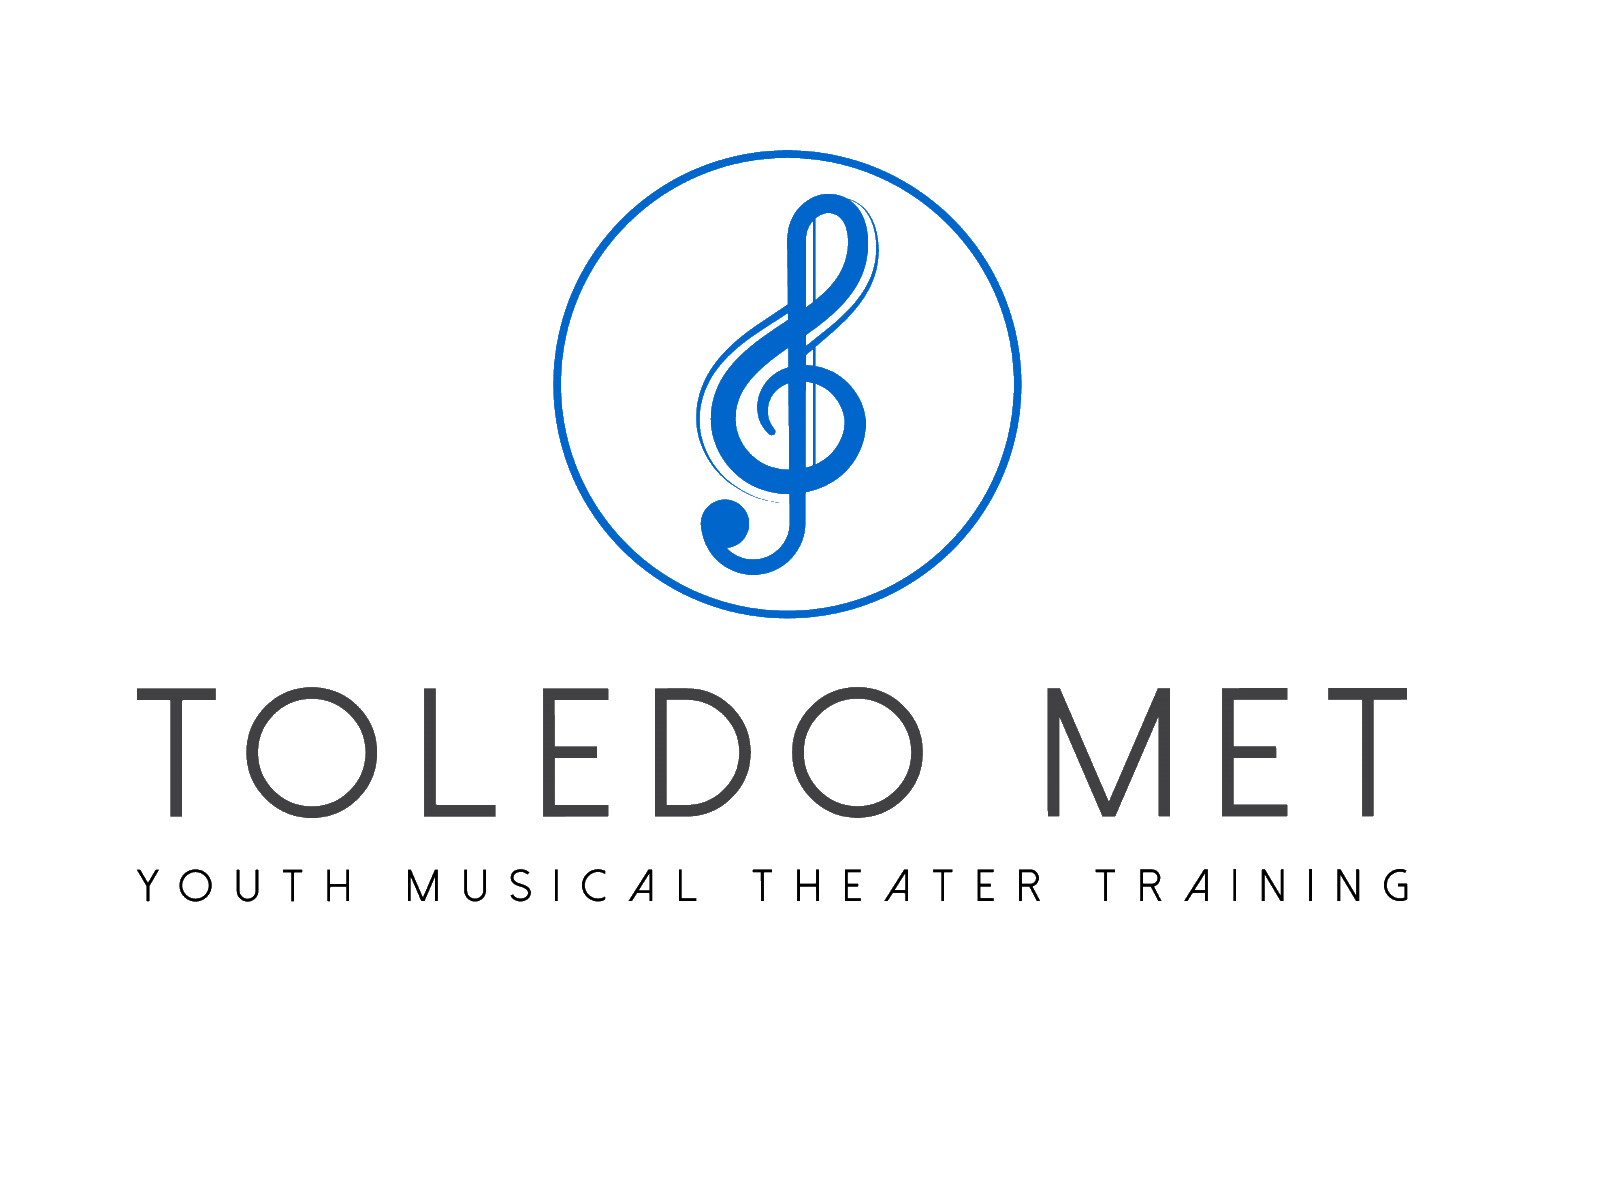 Youth Musical Theater Training - Toledo Met